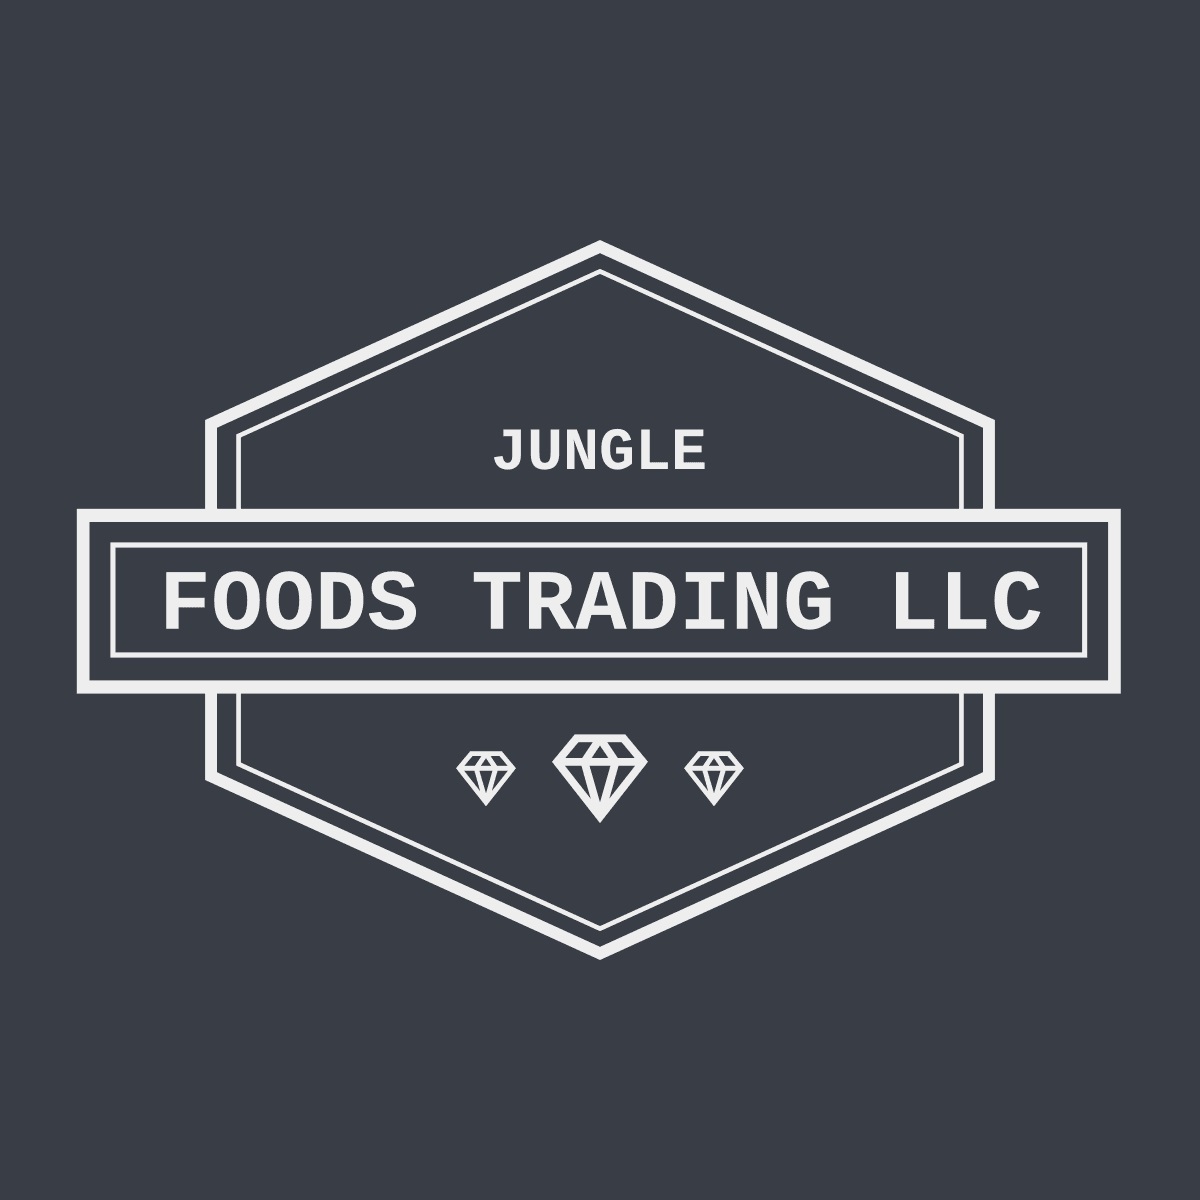 Jungle Foods